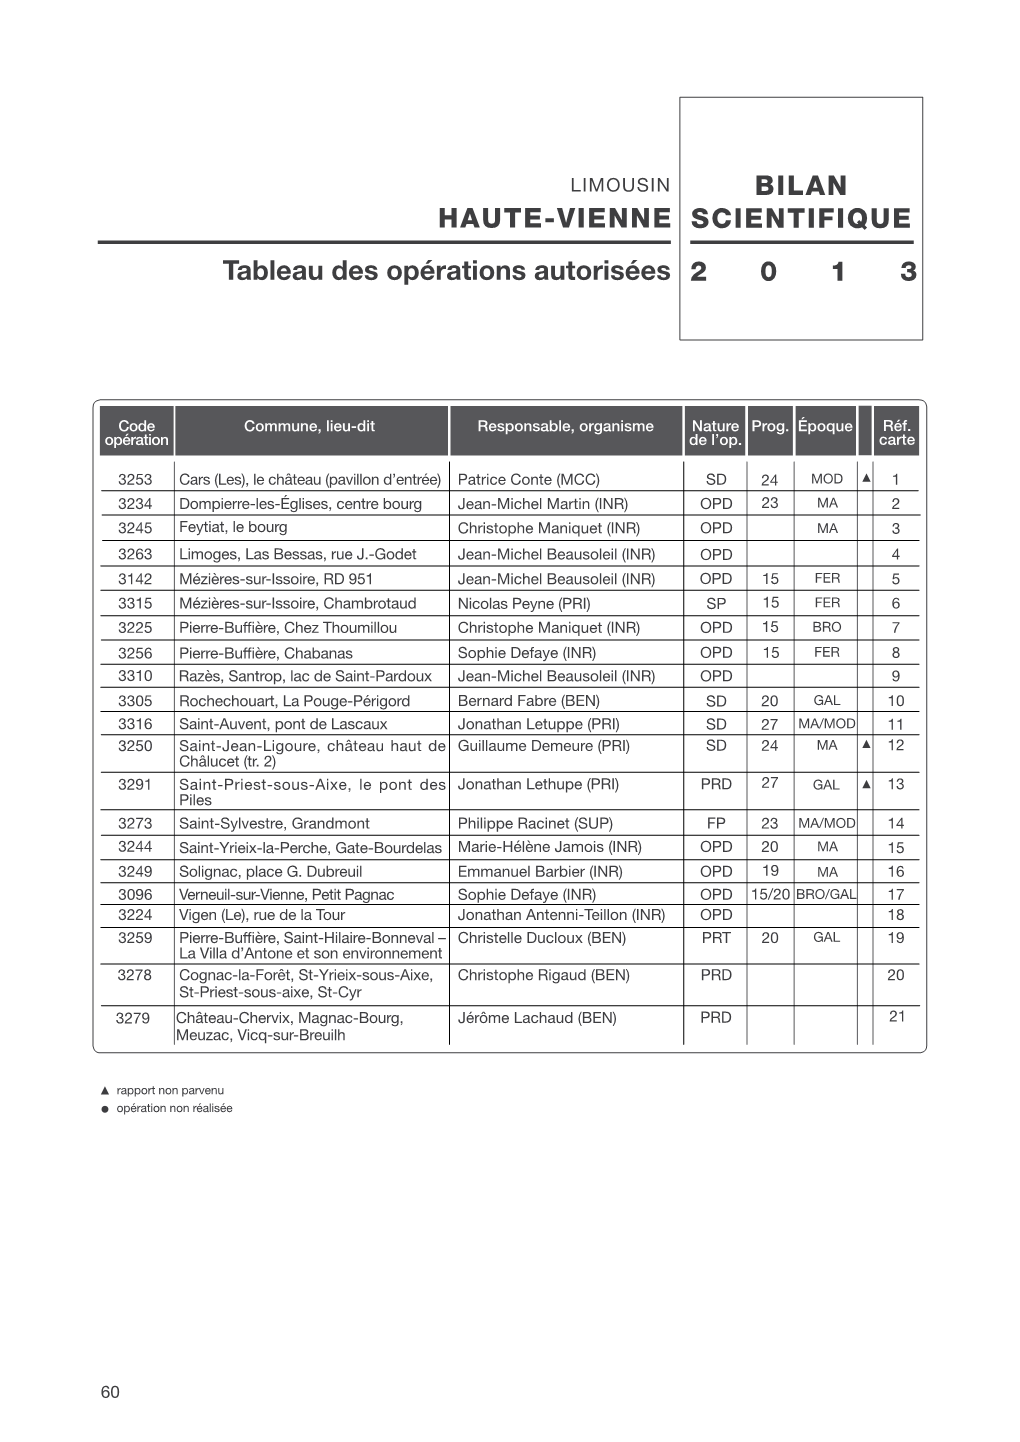 BSR 2013 Haute-Vienne PDF 4 MO